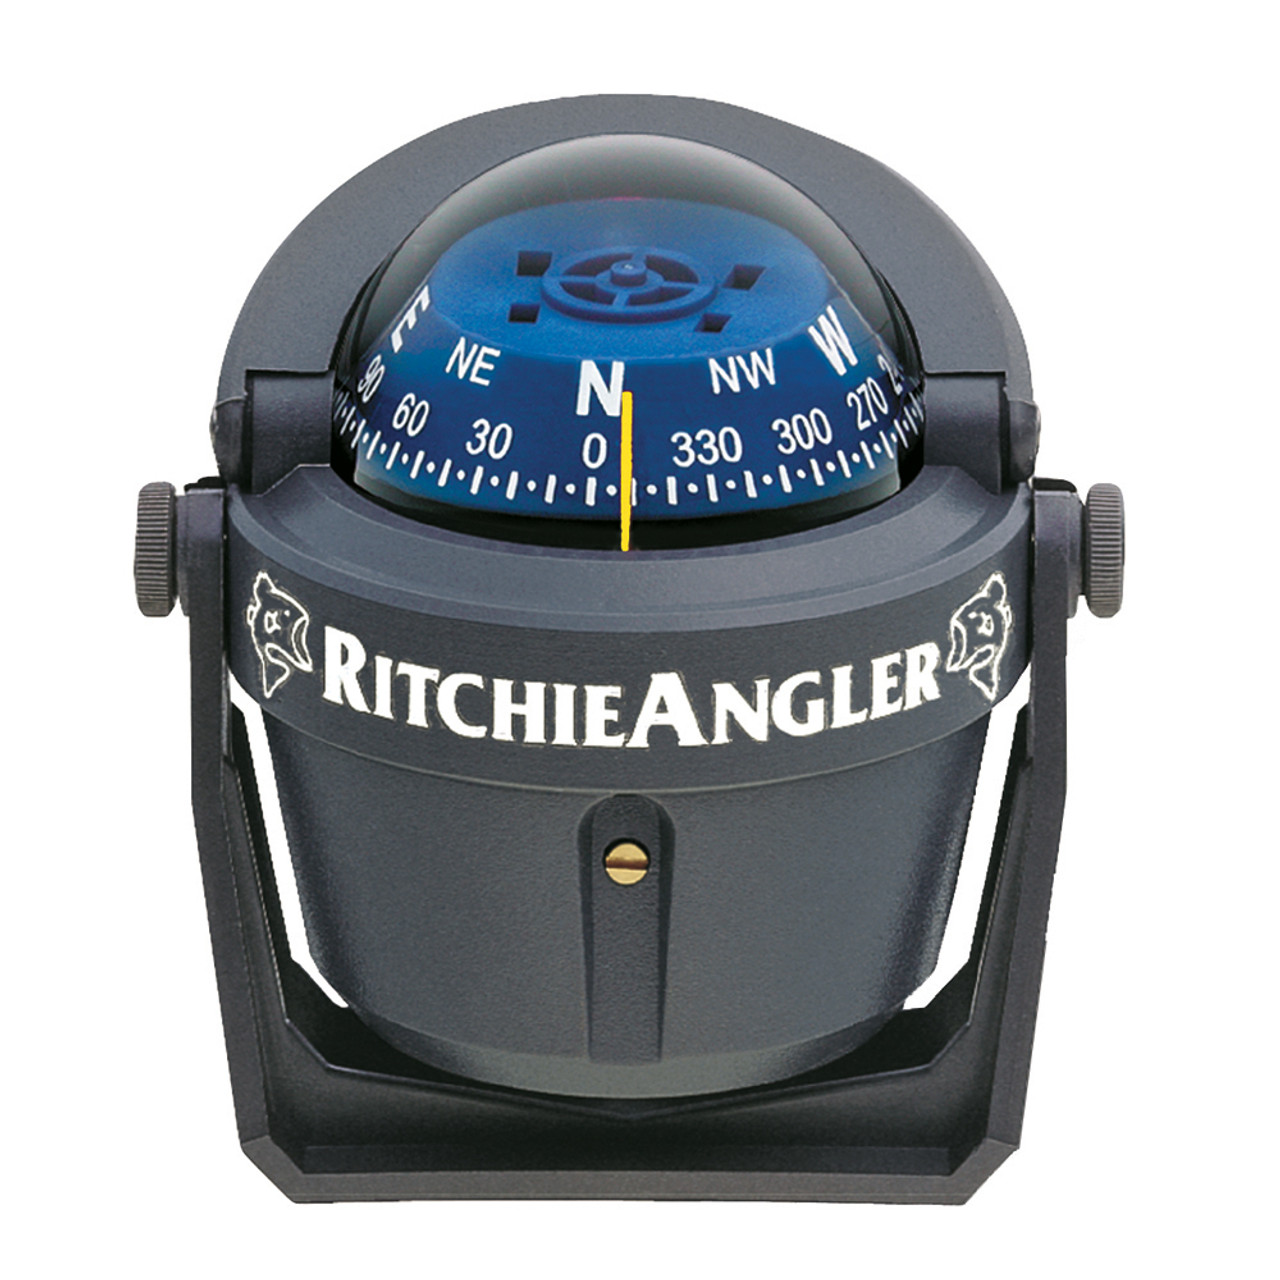 RA-91 Ritchie RA-91 RitchieAngler Compass Bracket Mount Gray